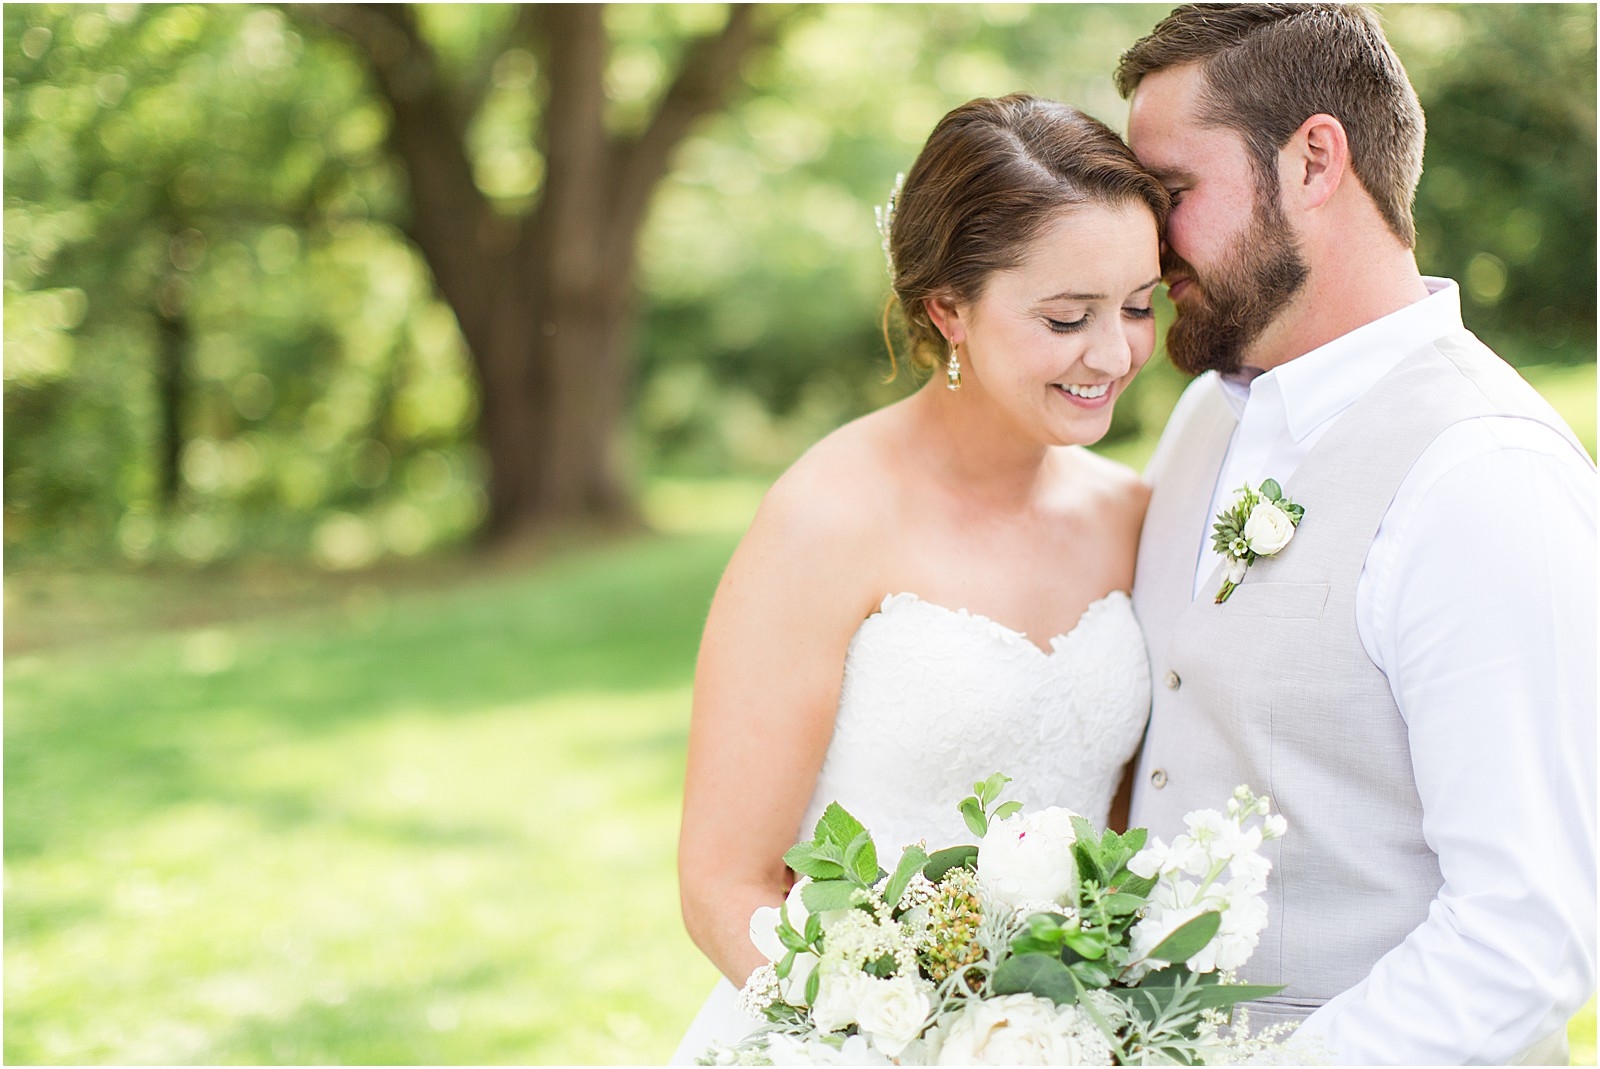 A Evansville Indiana Backyard Wedding | Bailey and Ben 038.jpg